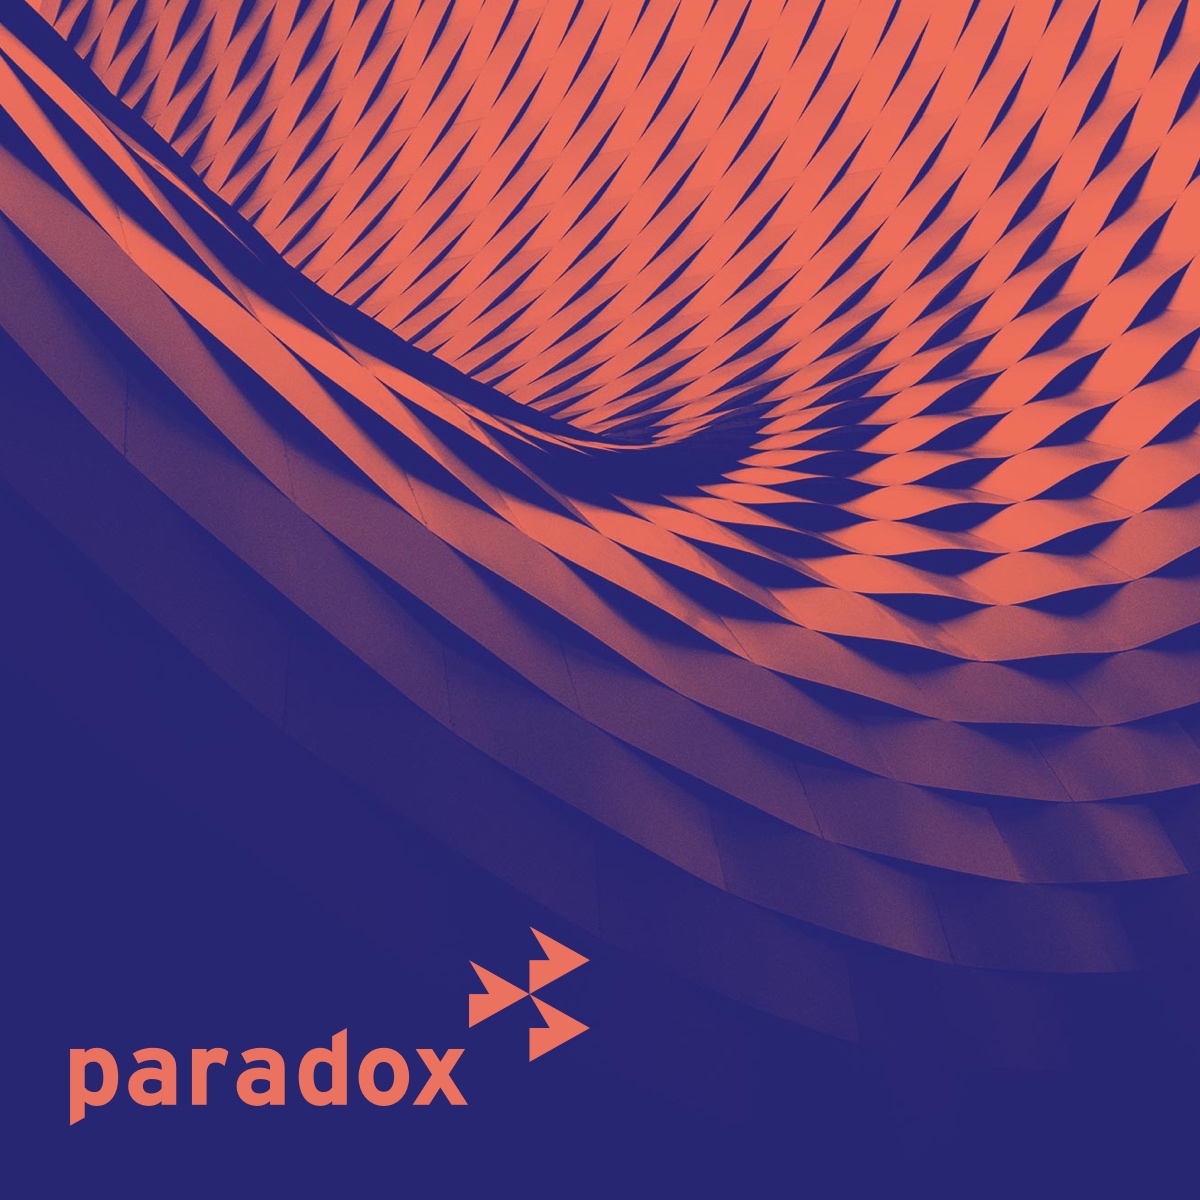 paradox retail logo with pattern